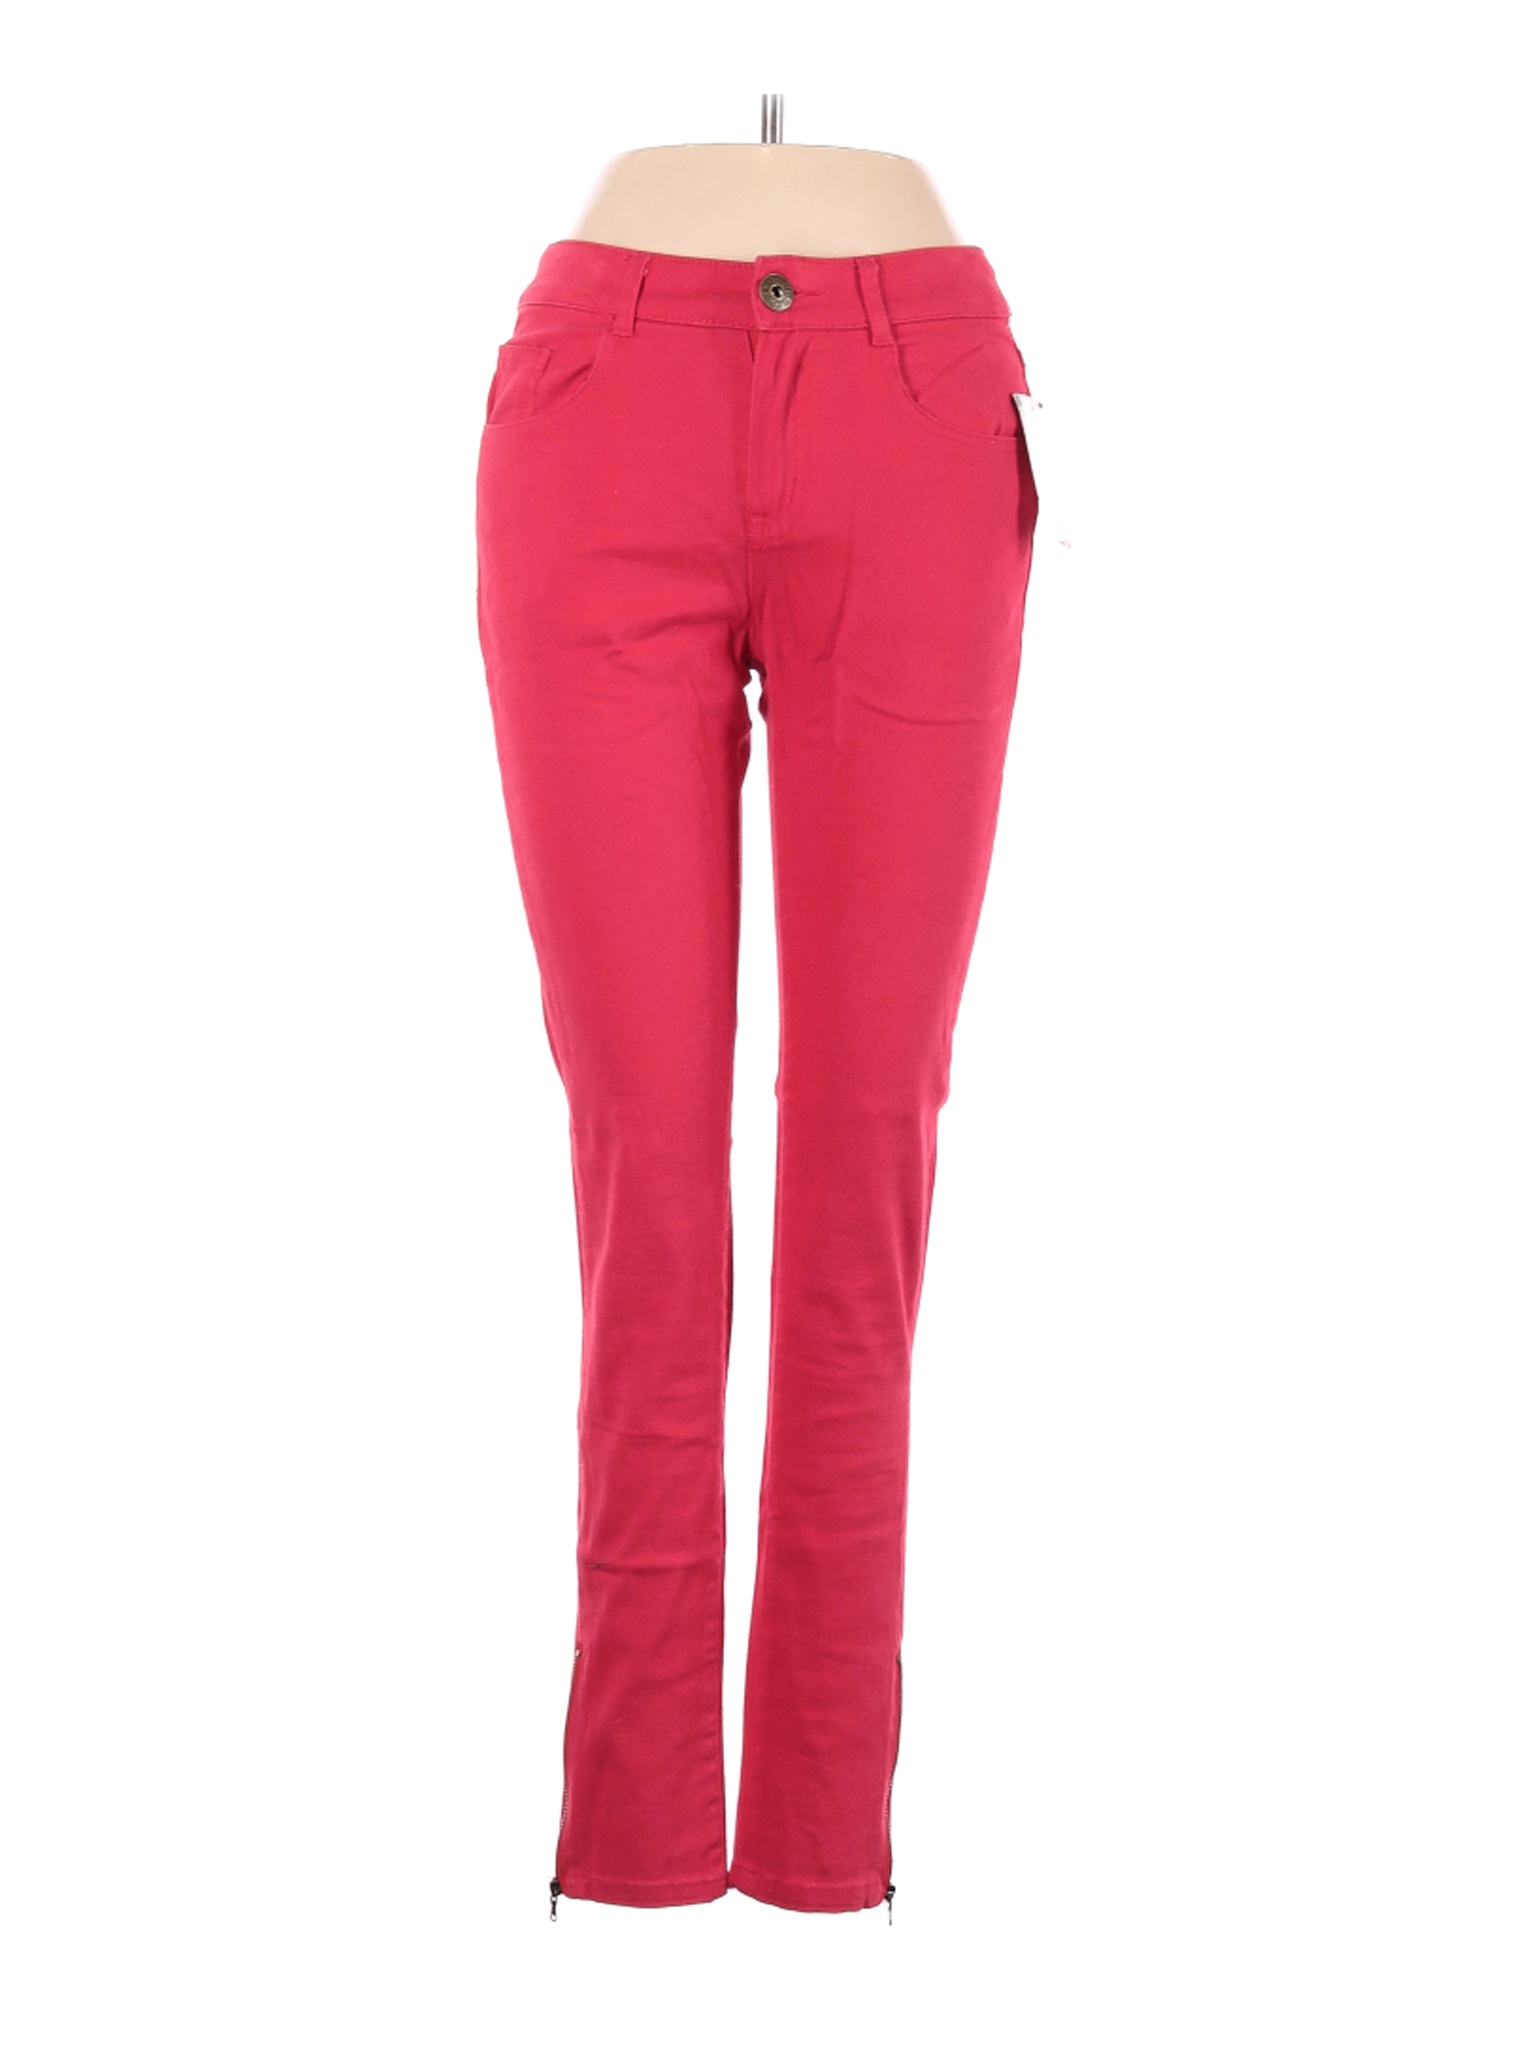 NWT Bongo Women Red Jeans 1 | eBay